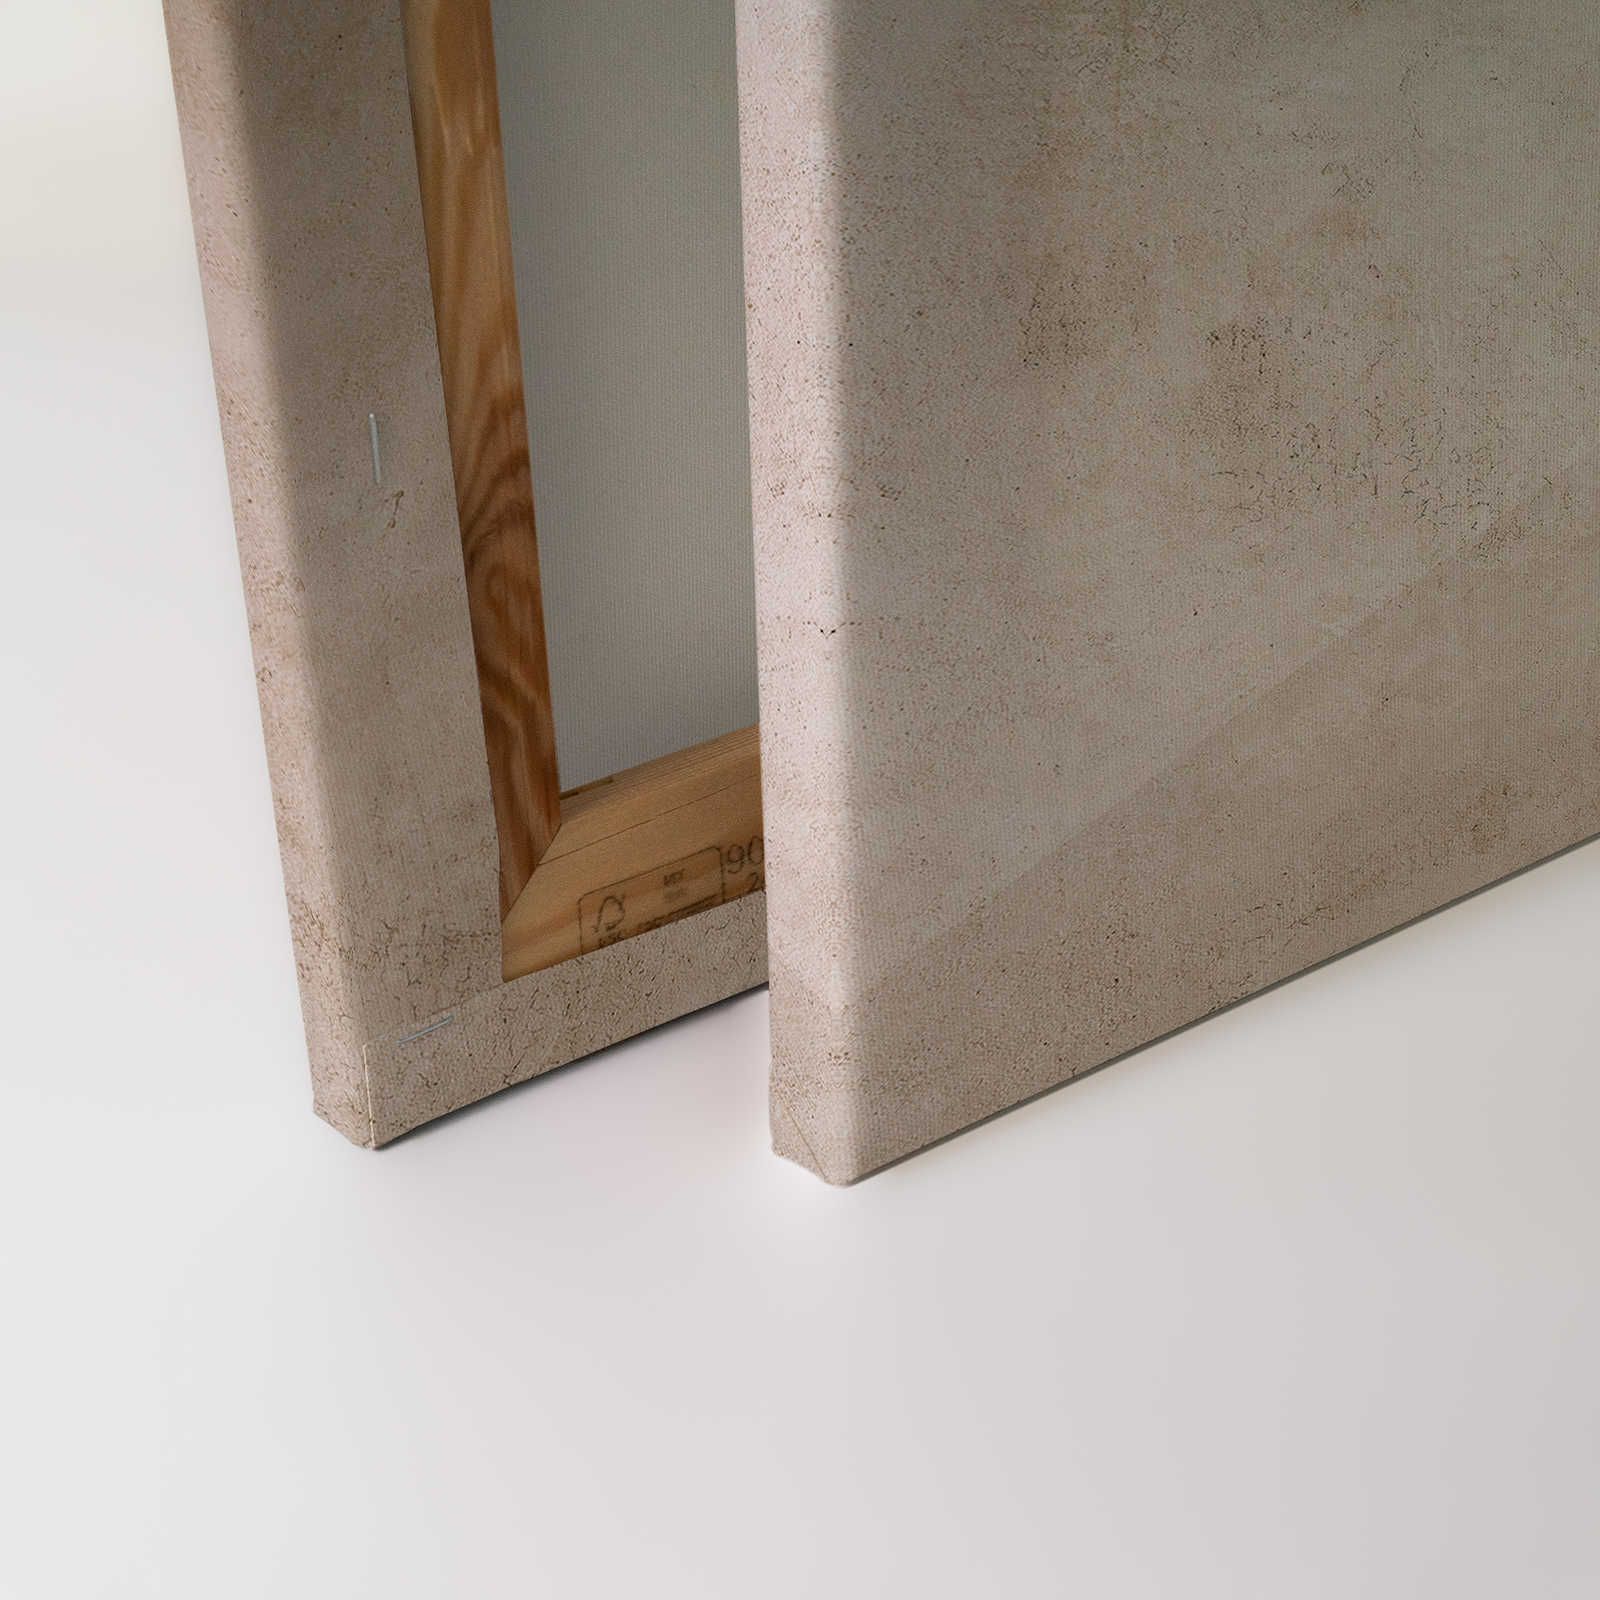             Futura 1 - Tela di cemento dipinta con motivi 3D - 0,90 m x 0,60 m
        